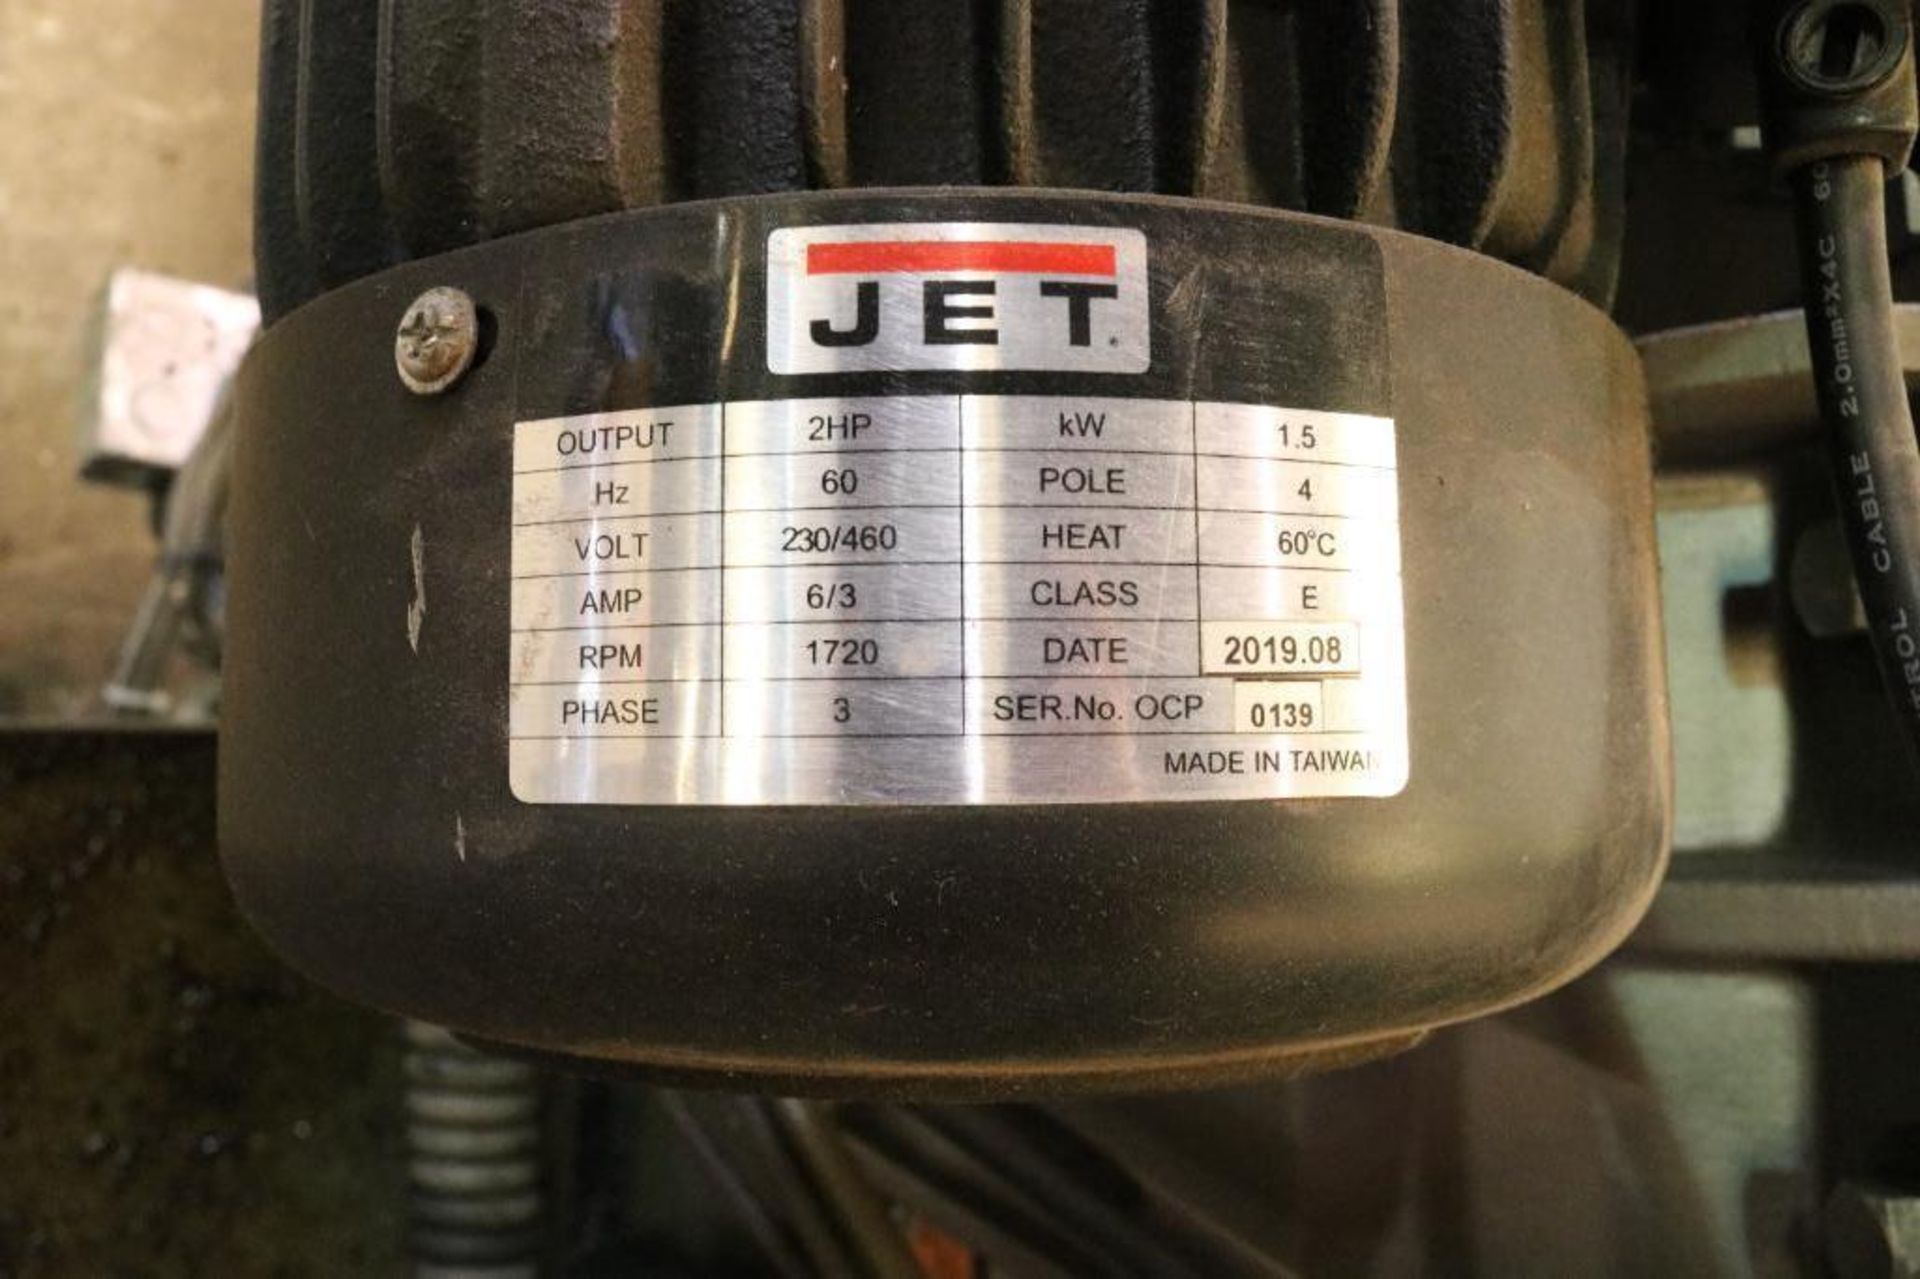 2019 Jet Model J-7040M Horizontal Metal Cutting Bandsaw Stock Number: 414475 Serial No: 1910960 10" - Image 8 of 16